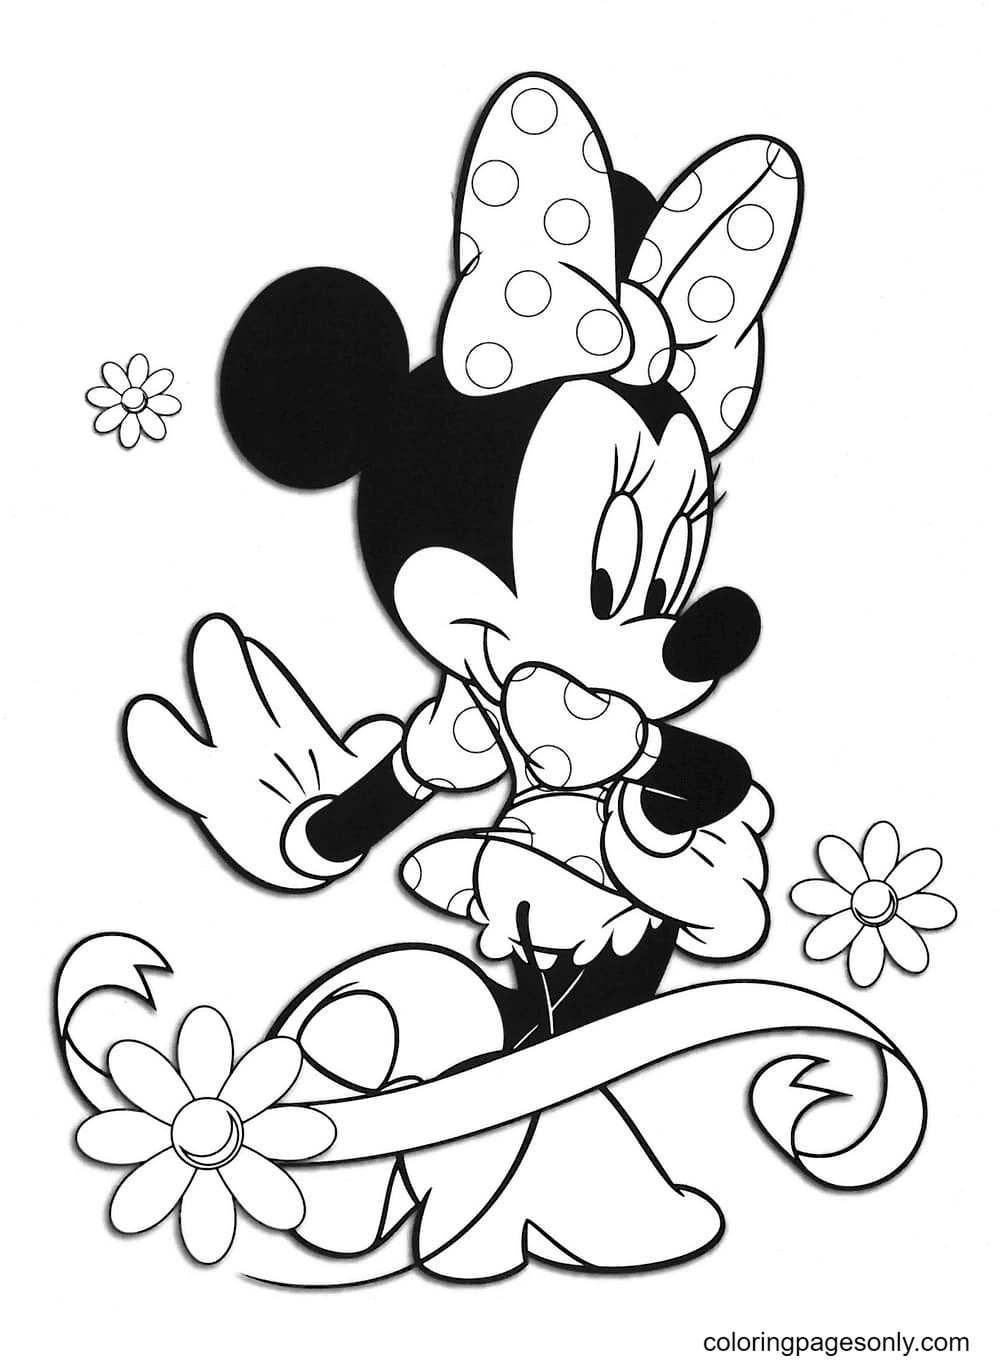 Minnie Mouse met polkadotrok en strik van Minnie Mouse